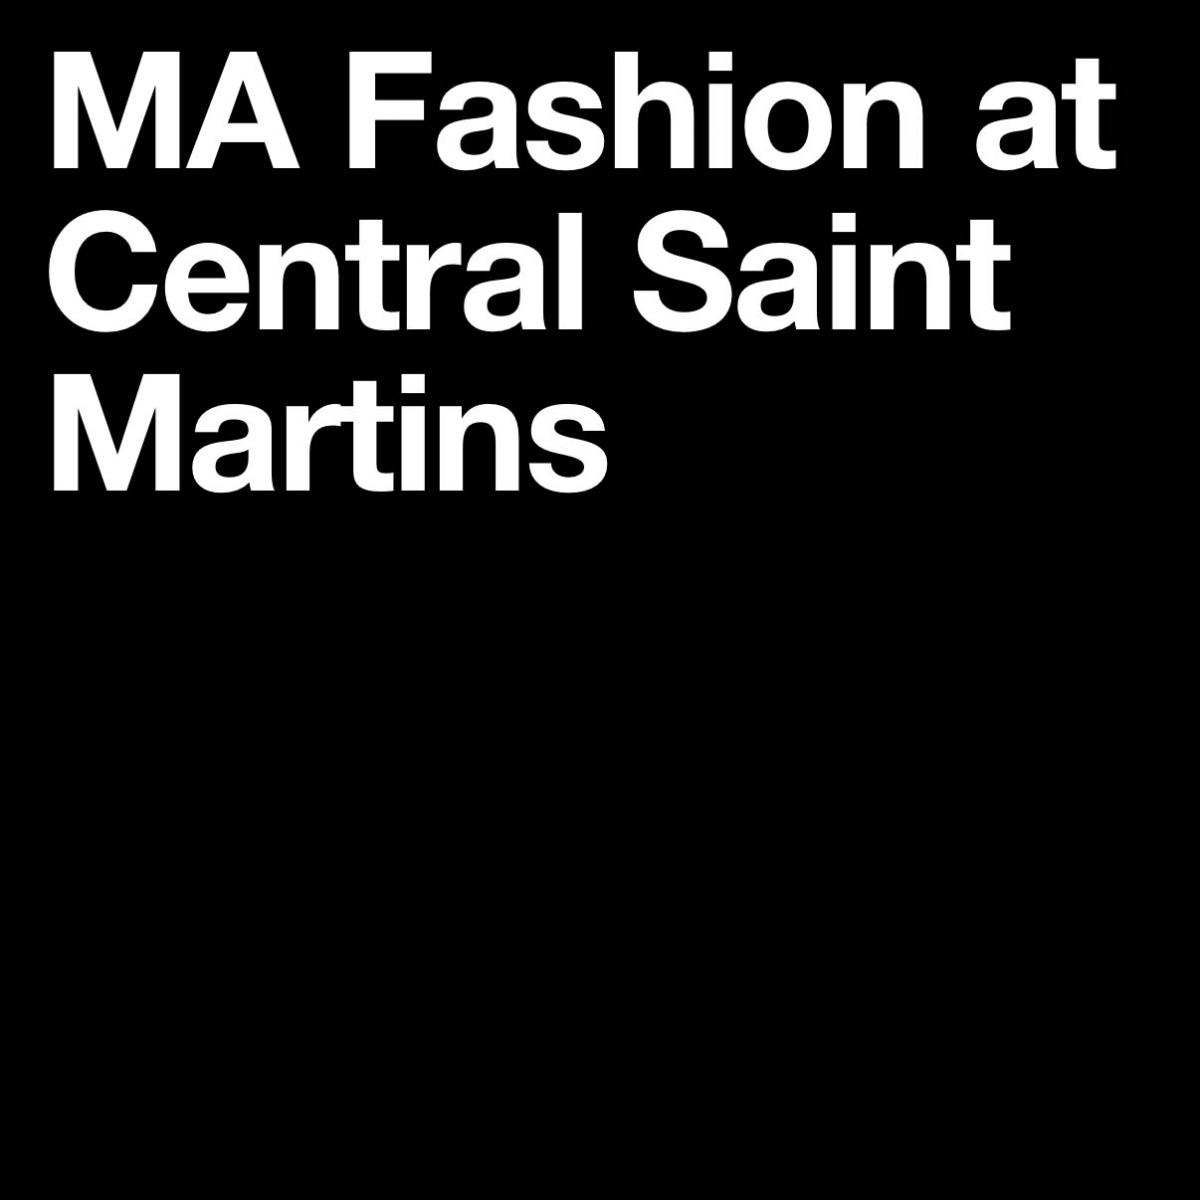 Central Saint Martins MA Fashion